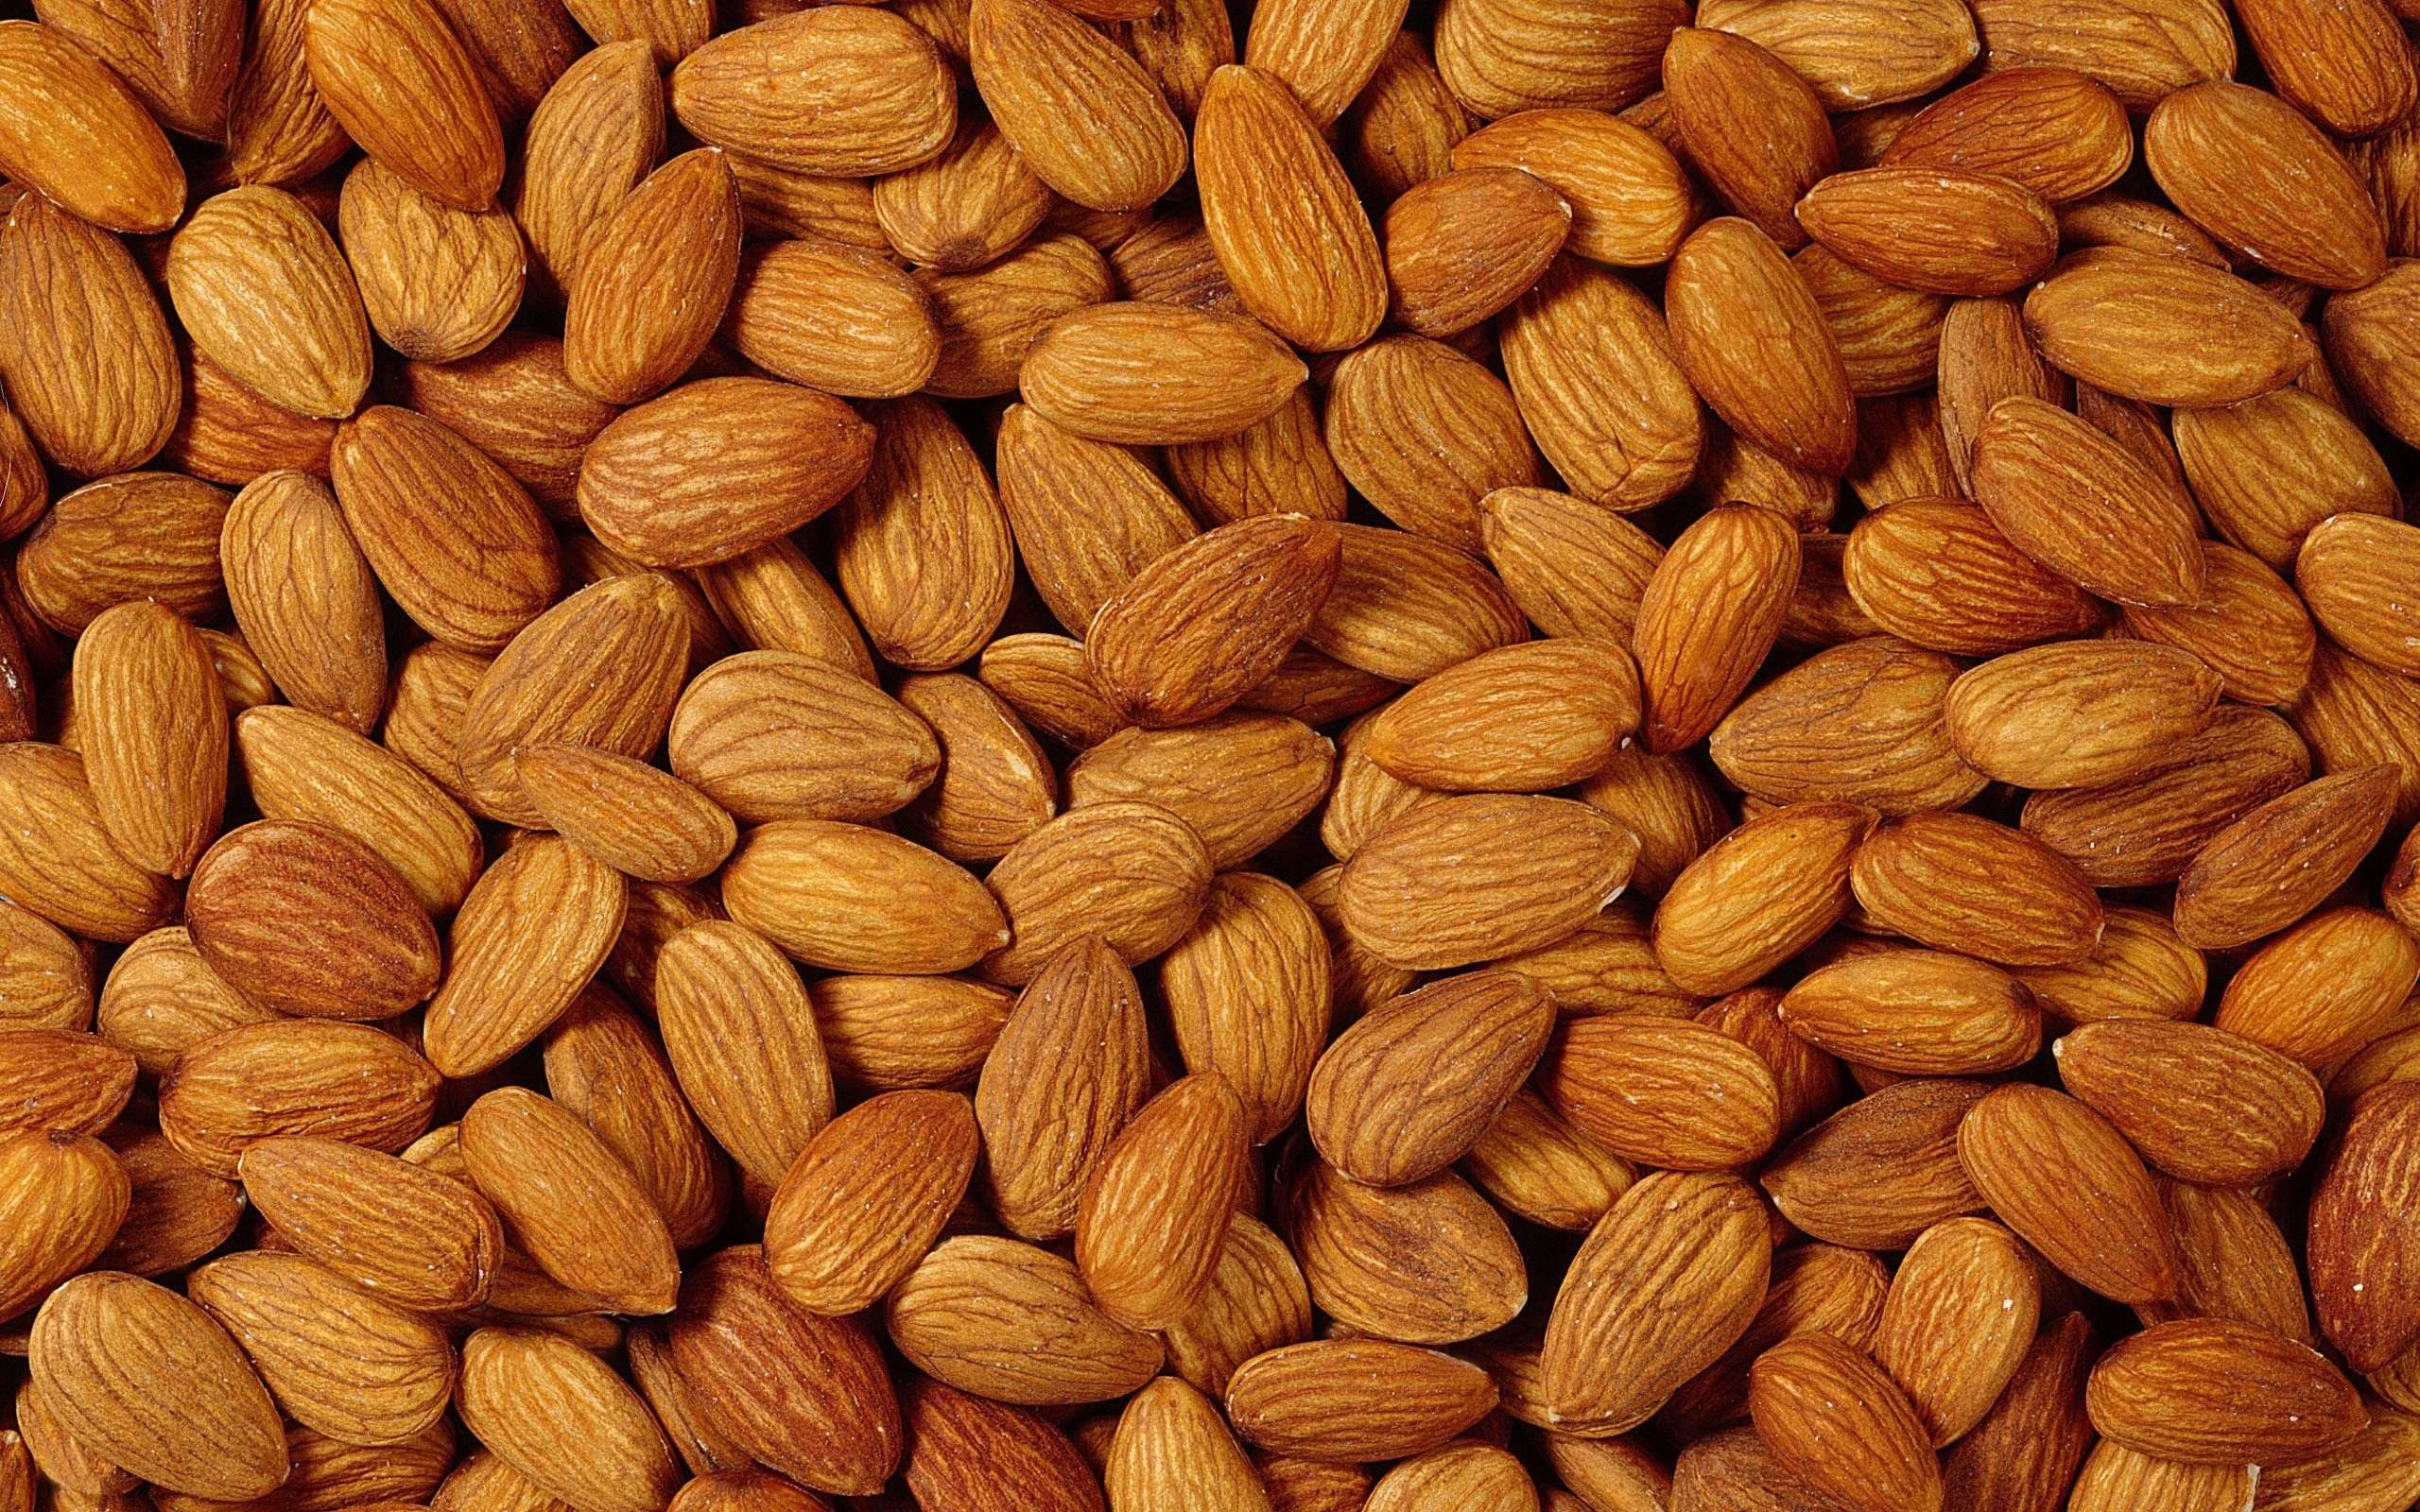 Almonds Background